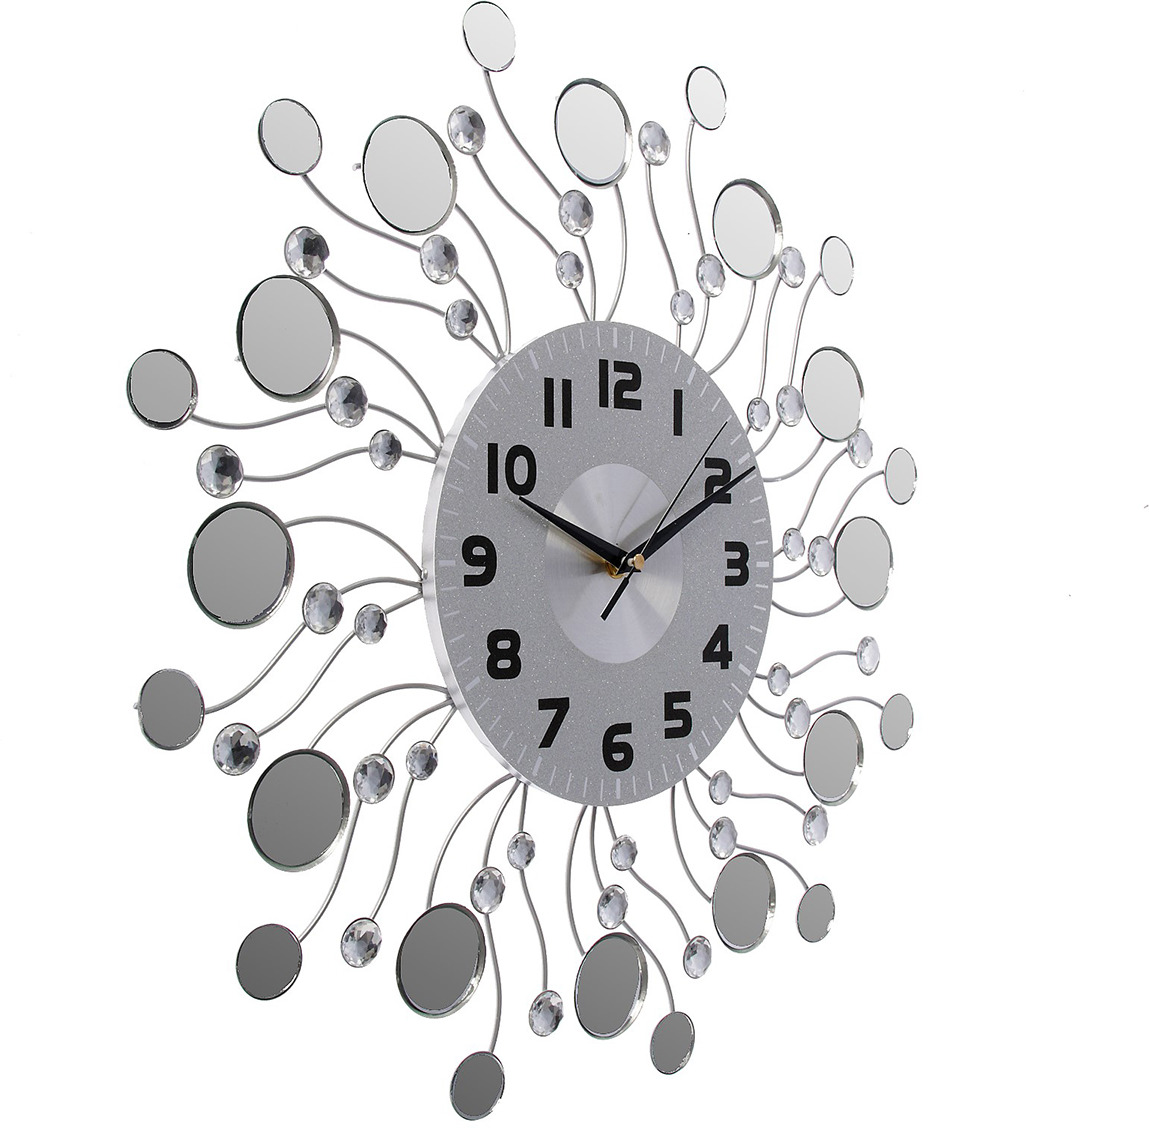 Часы капли воды. Настенные часы, серебристый. Часы настенные с капельками. Часы настенные на стекле. Настенные интерьерные часы капля.